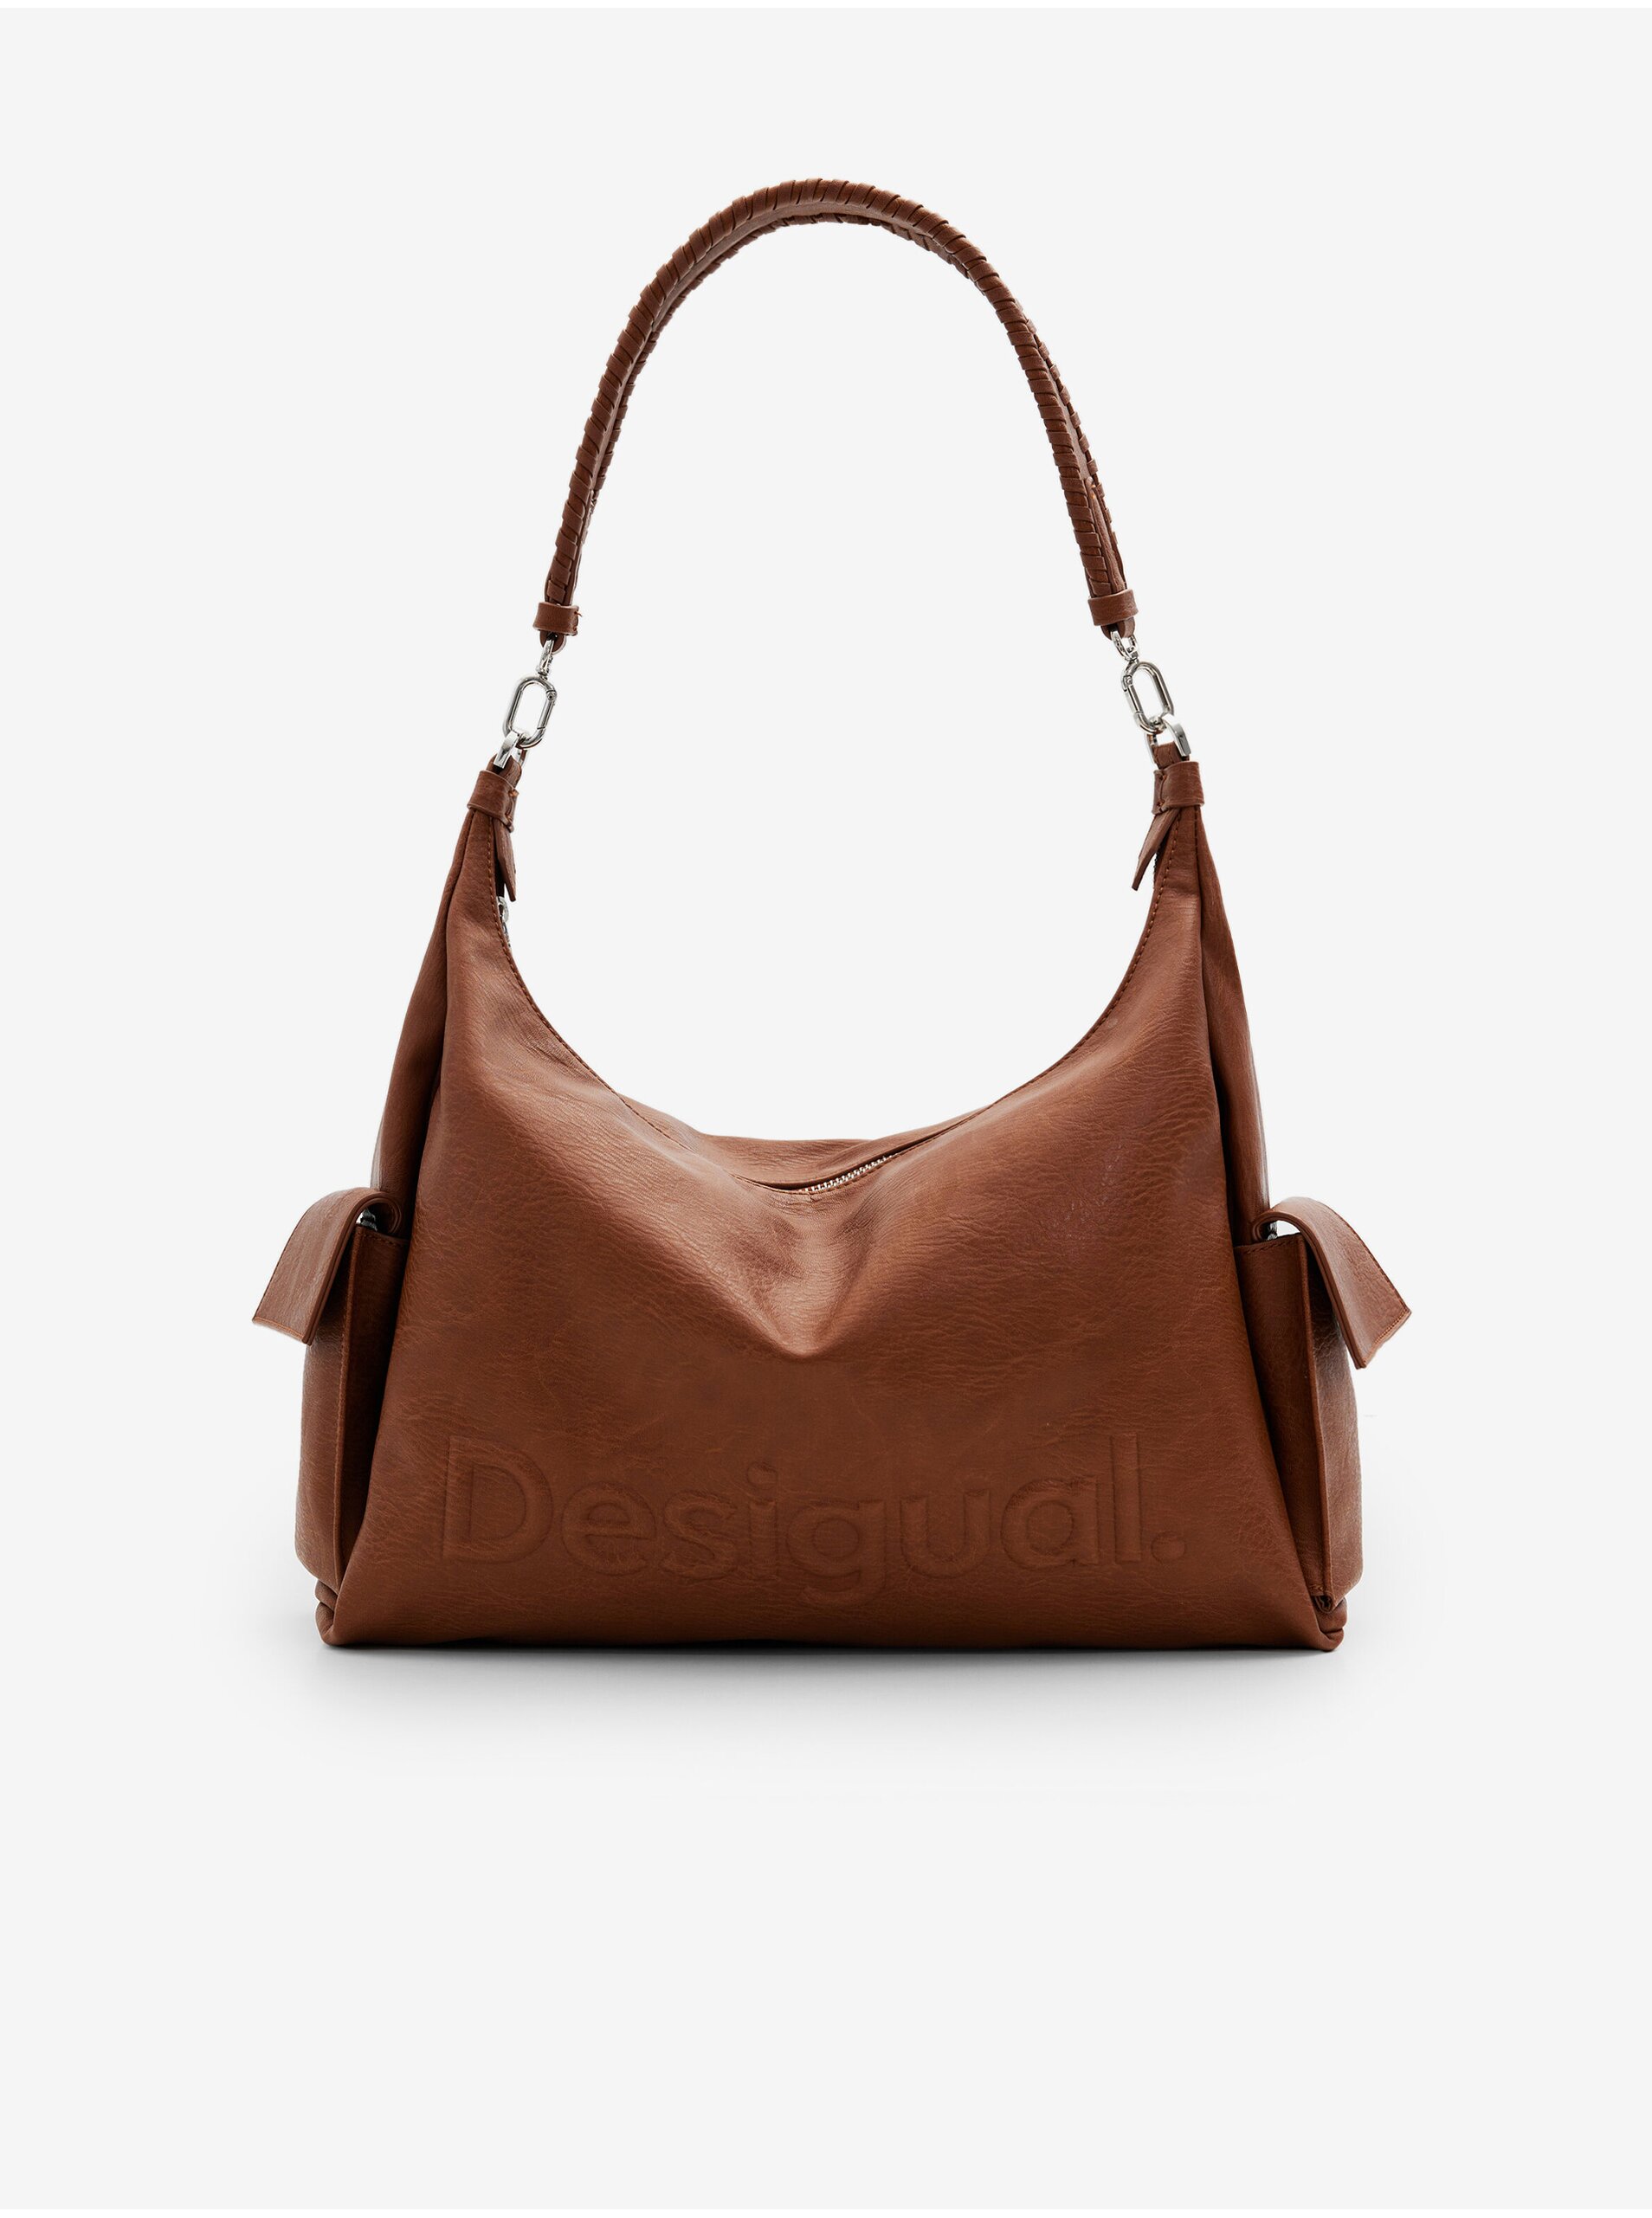 Women's brown handbag Desigual Half Logo 24 Brasilia - Women